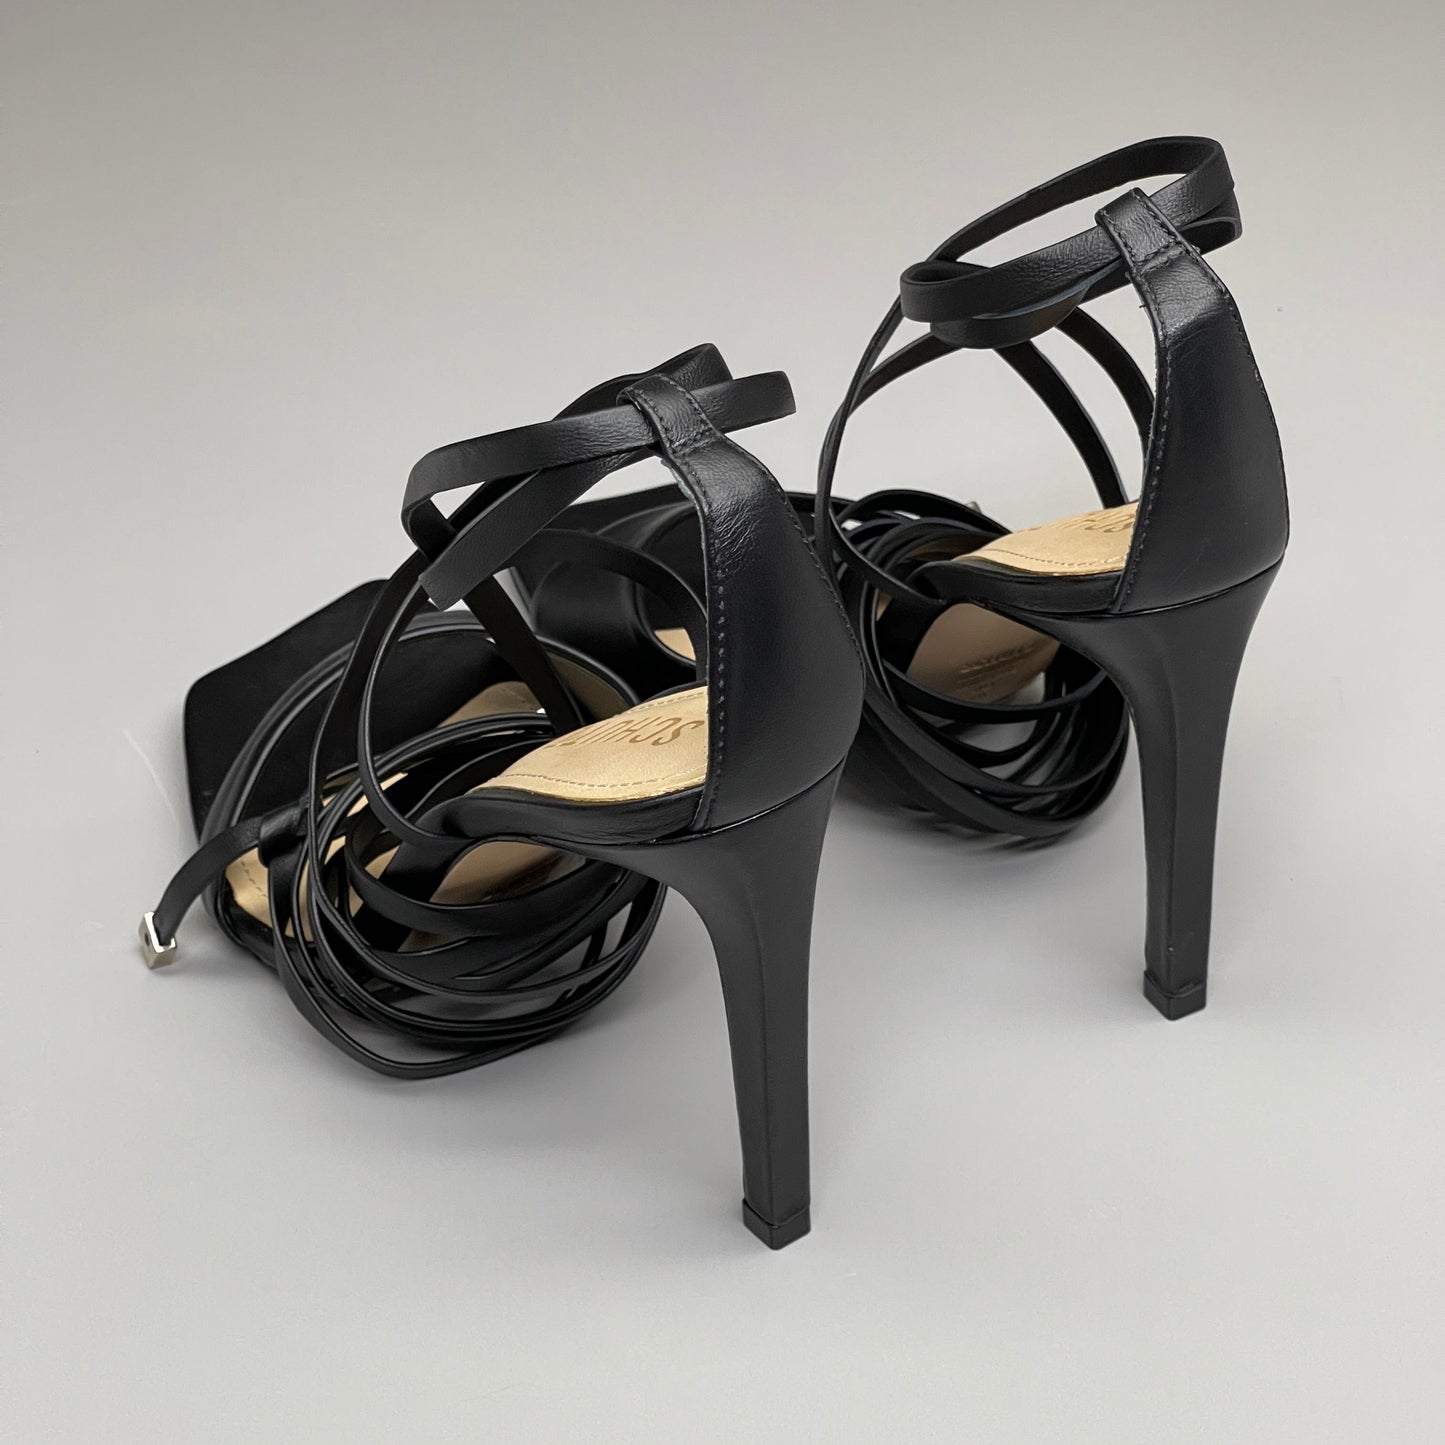 SCHUTZ Bryce Ankle Tie Women's Leather High Heel Strappy Sandal Black Sz 9.5B (New)